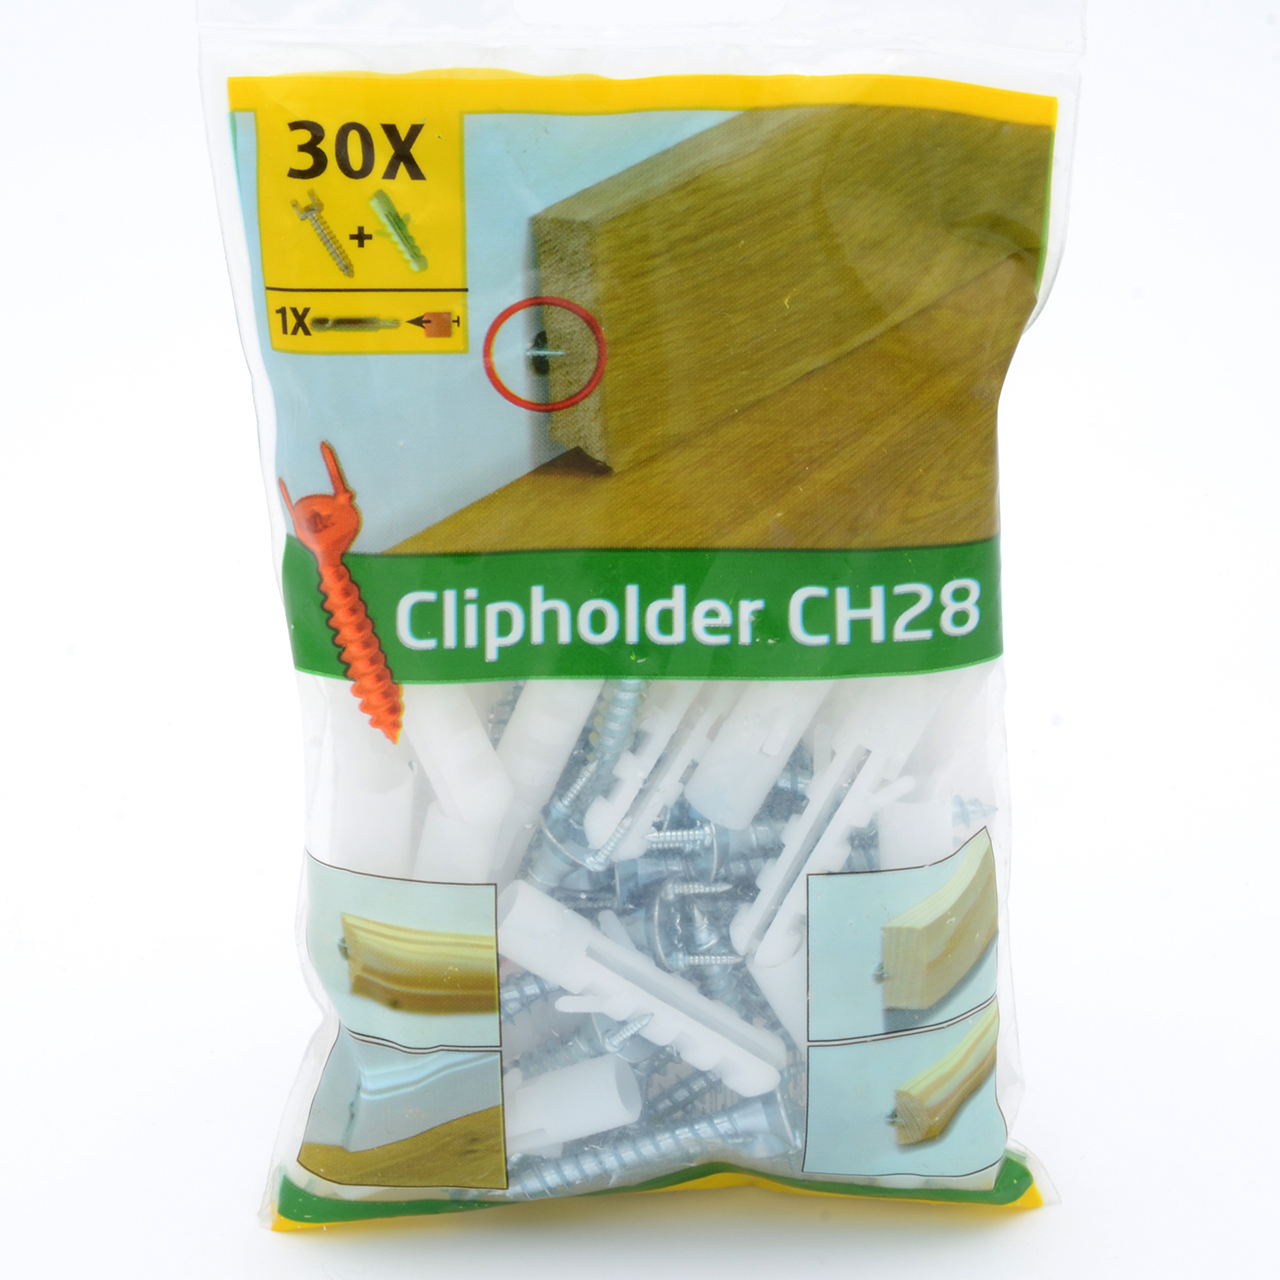 Neuhofer Clipholder CH28